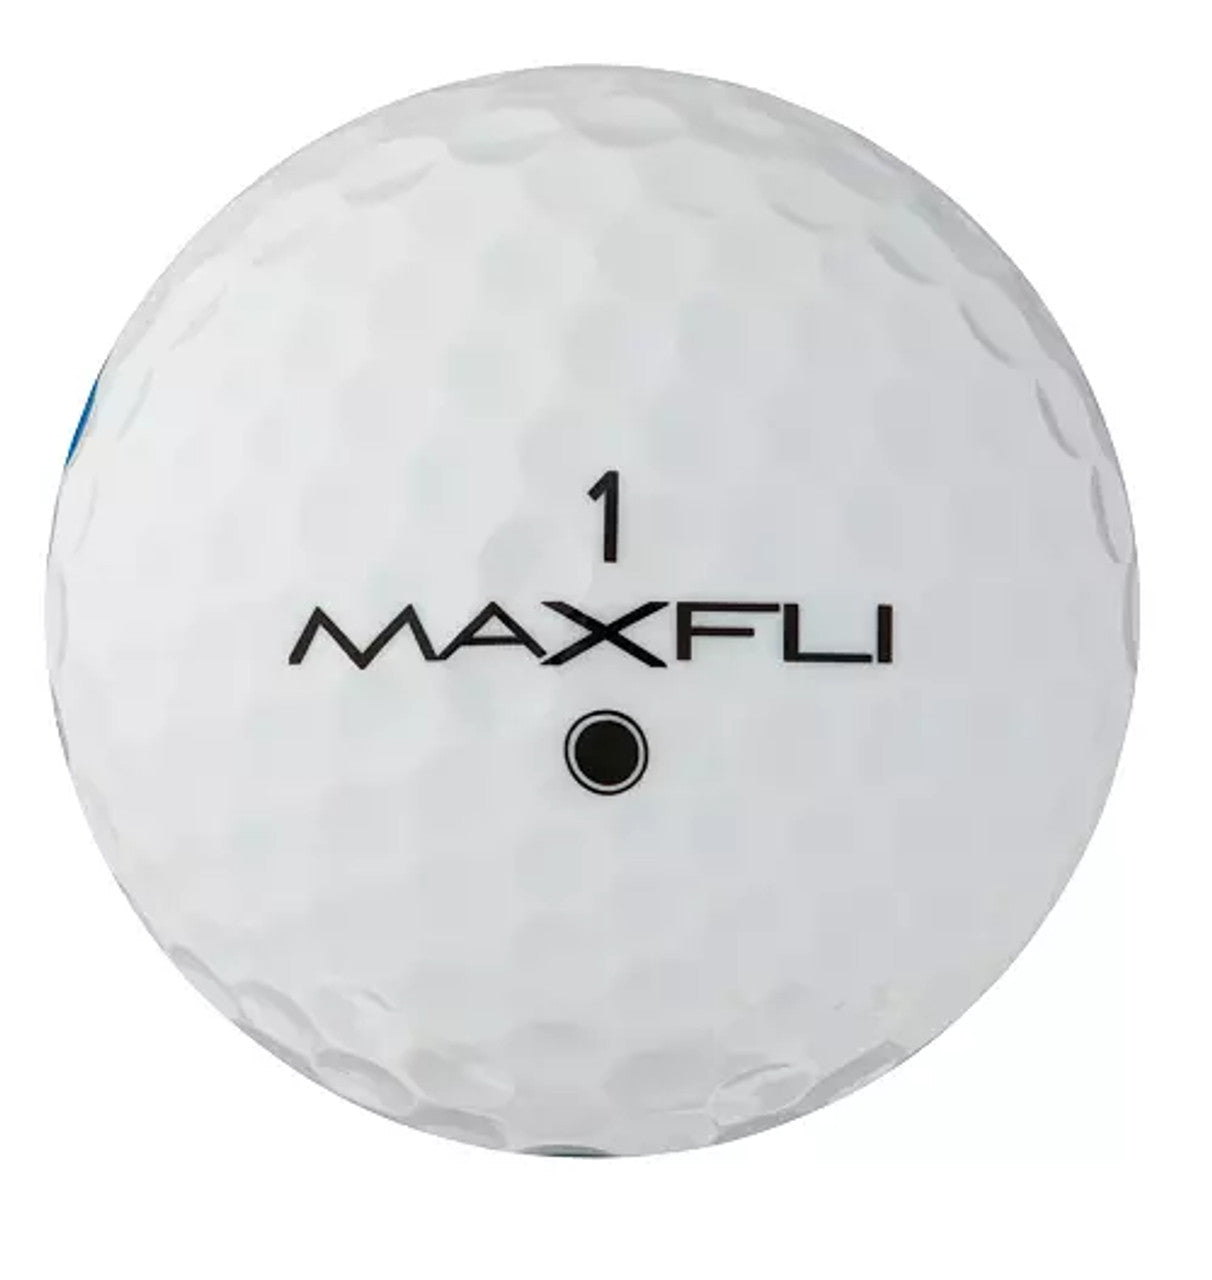 Maxfli Softfli Golf Balls - Plain